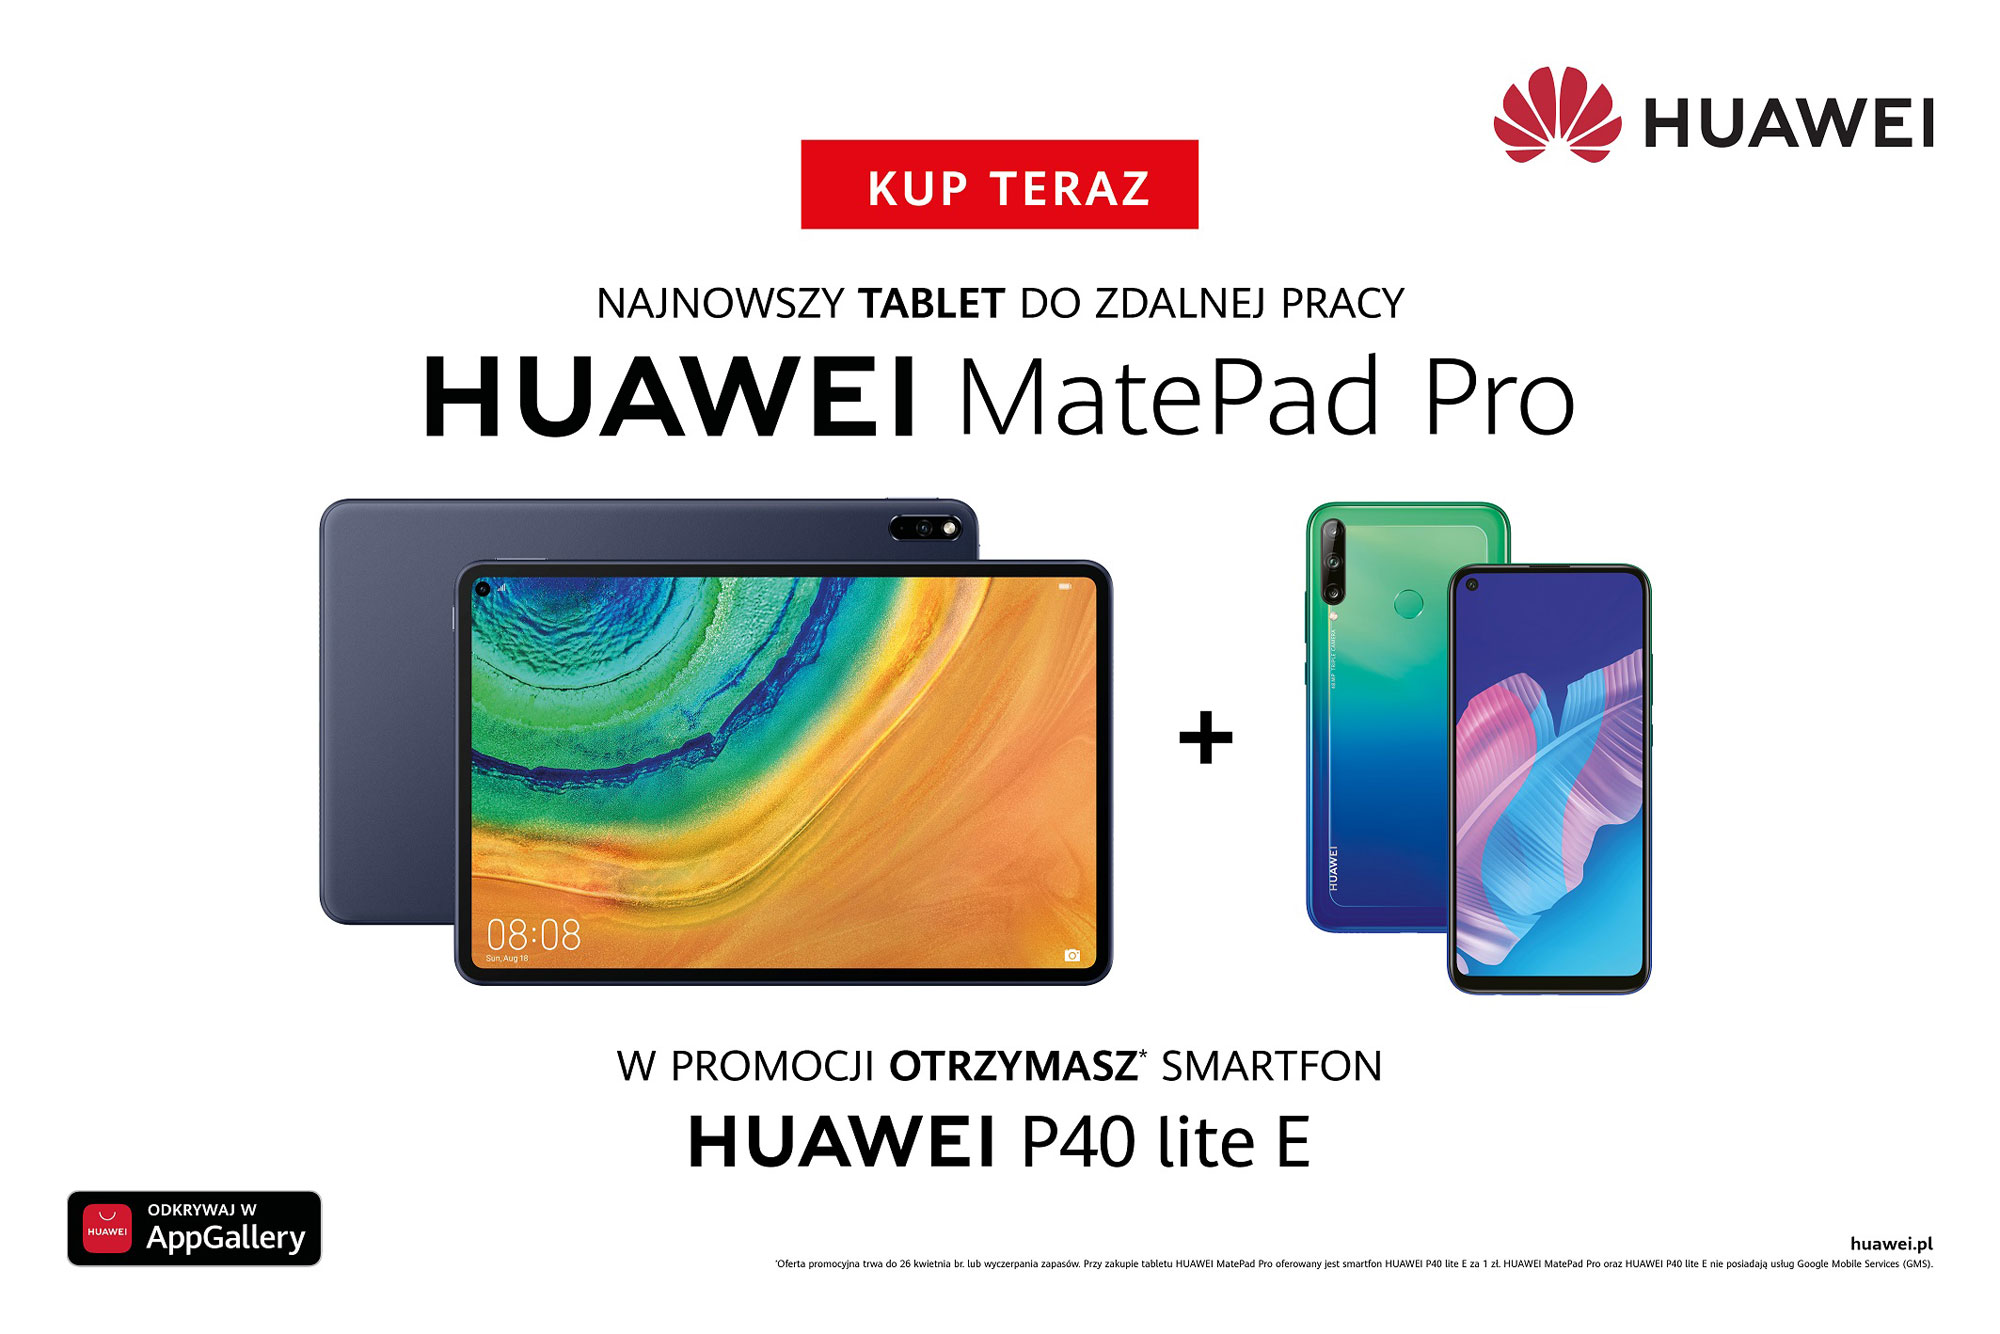 P40 lite E za 1 zł razem z tabletem Huawei MatePad Pro